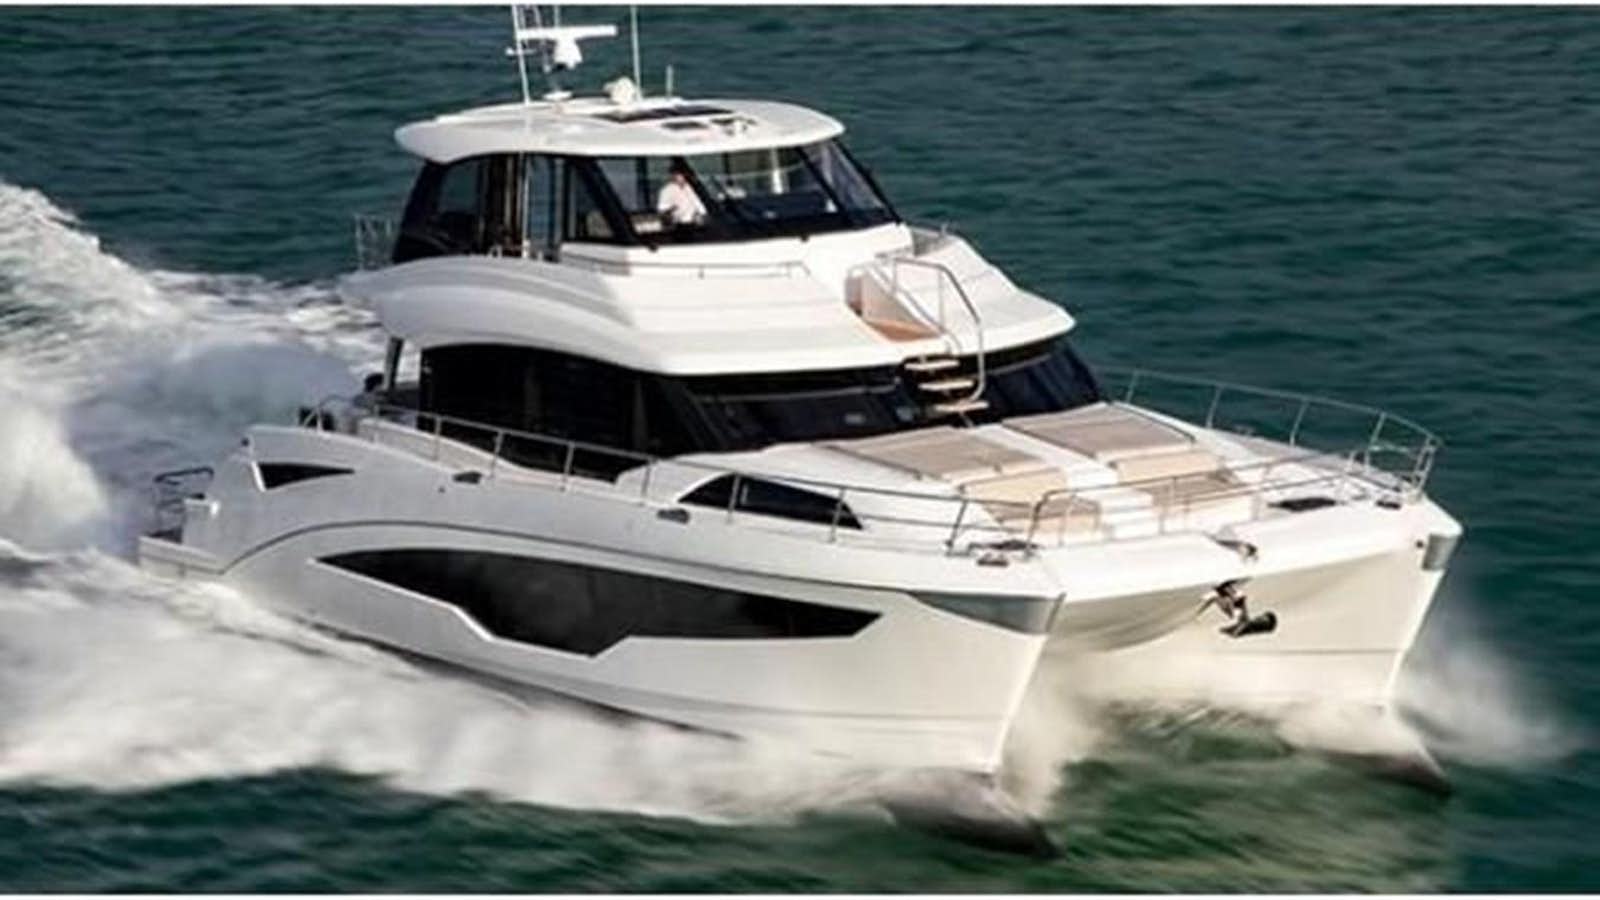 2021 aquila 70 luxury
Yacht for Sale